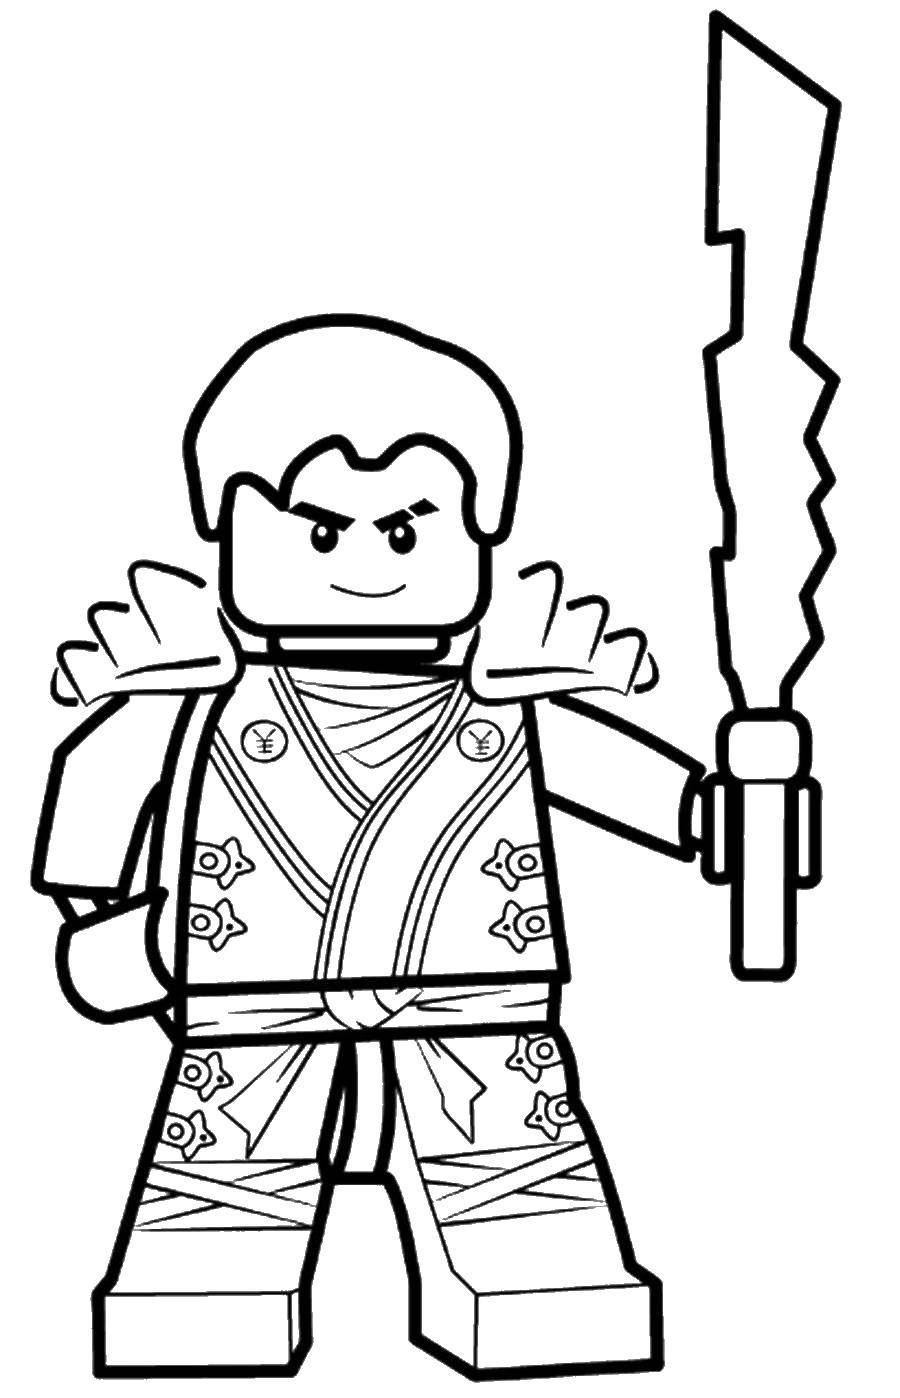 Название: Раскраска Игрушка ниндзя. Категория: лего ниндзя го. Теги: меч, ниндзя, лего.